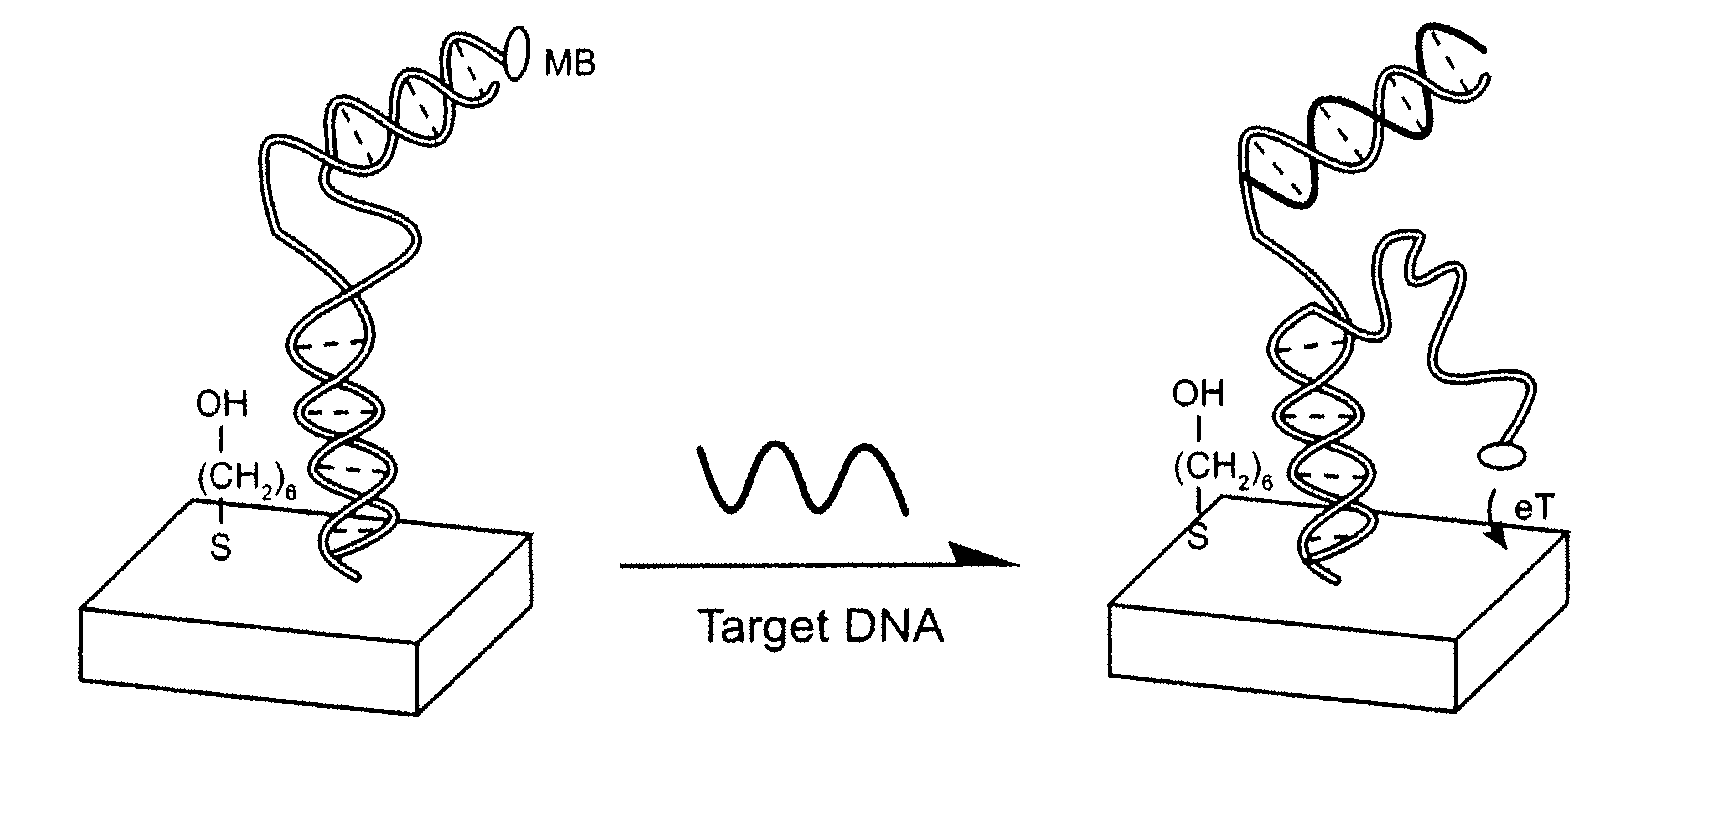 Signal-on architecture for electronic, oligonucleotide-based detectors